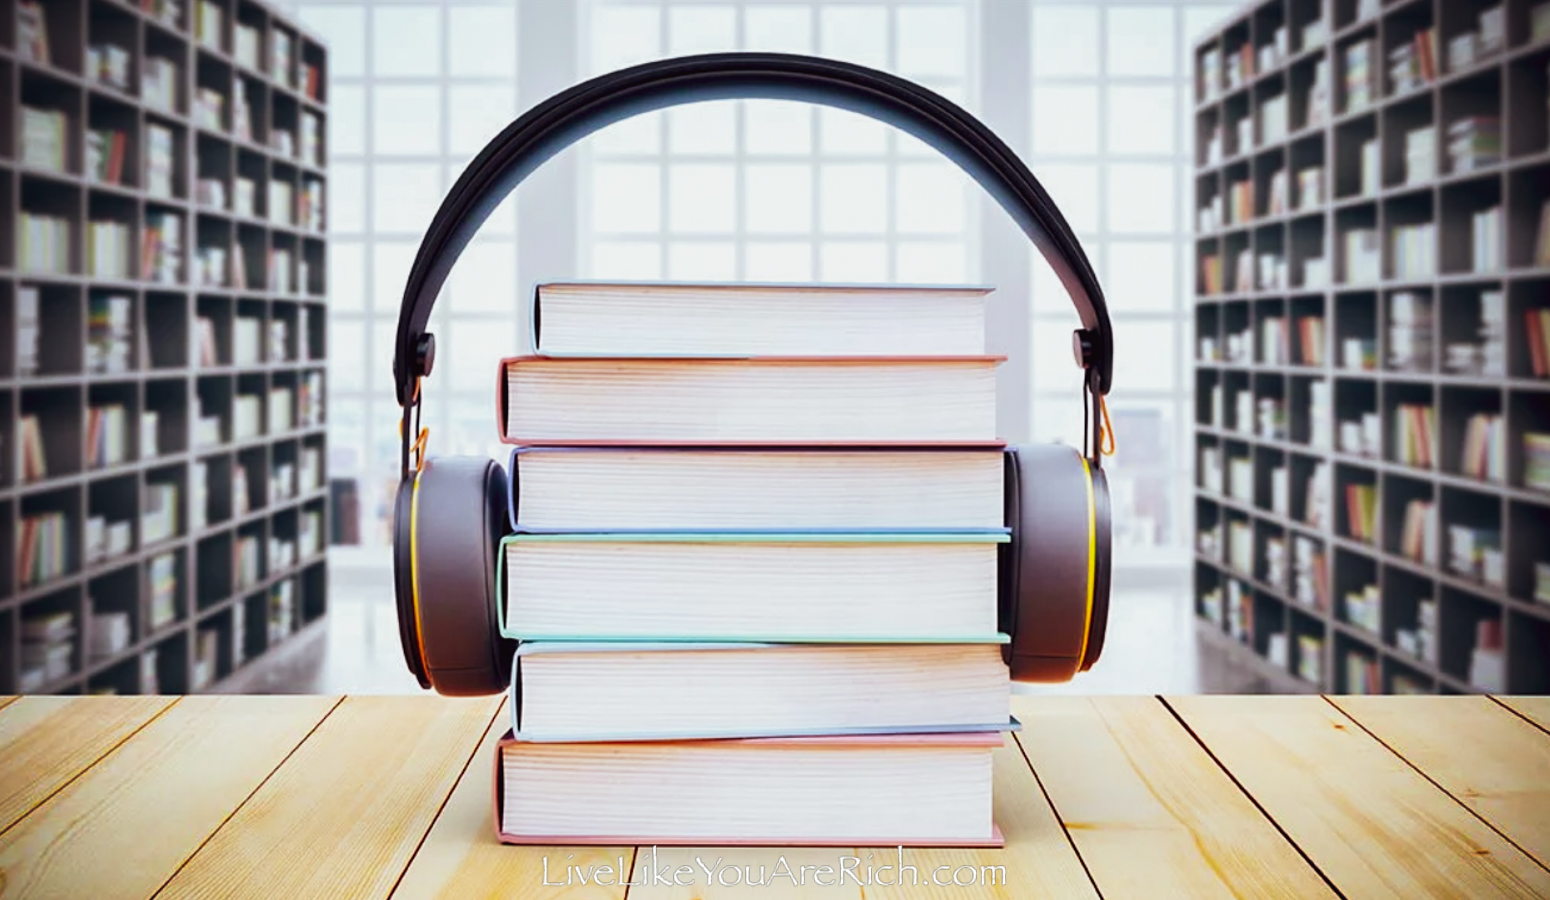 Audiobooks I Listened to in February 2023